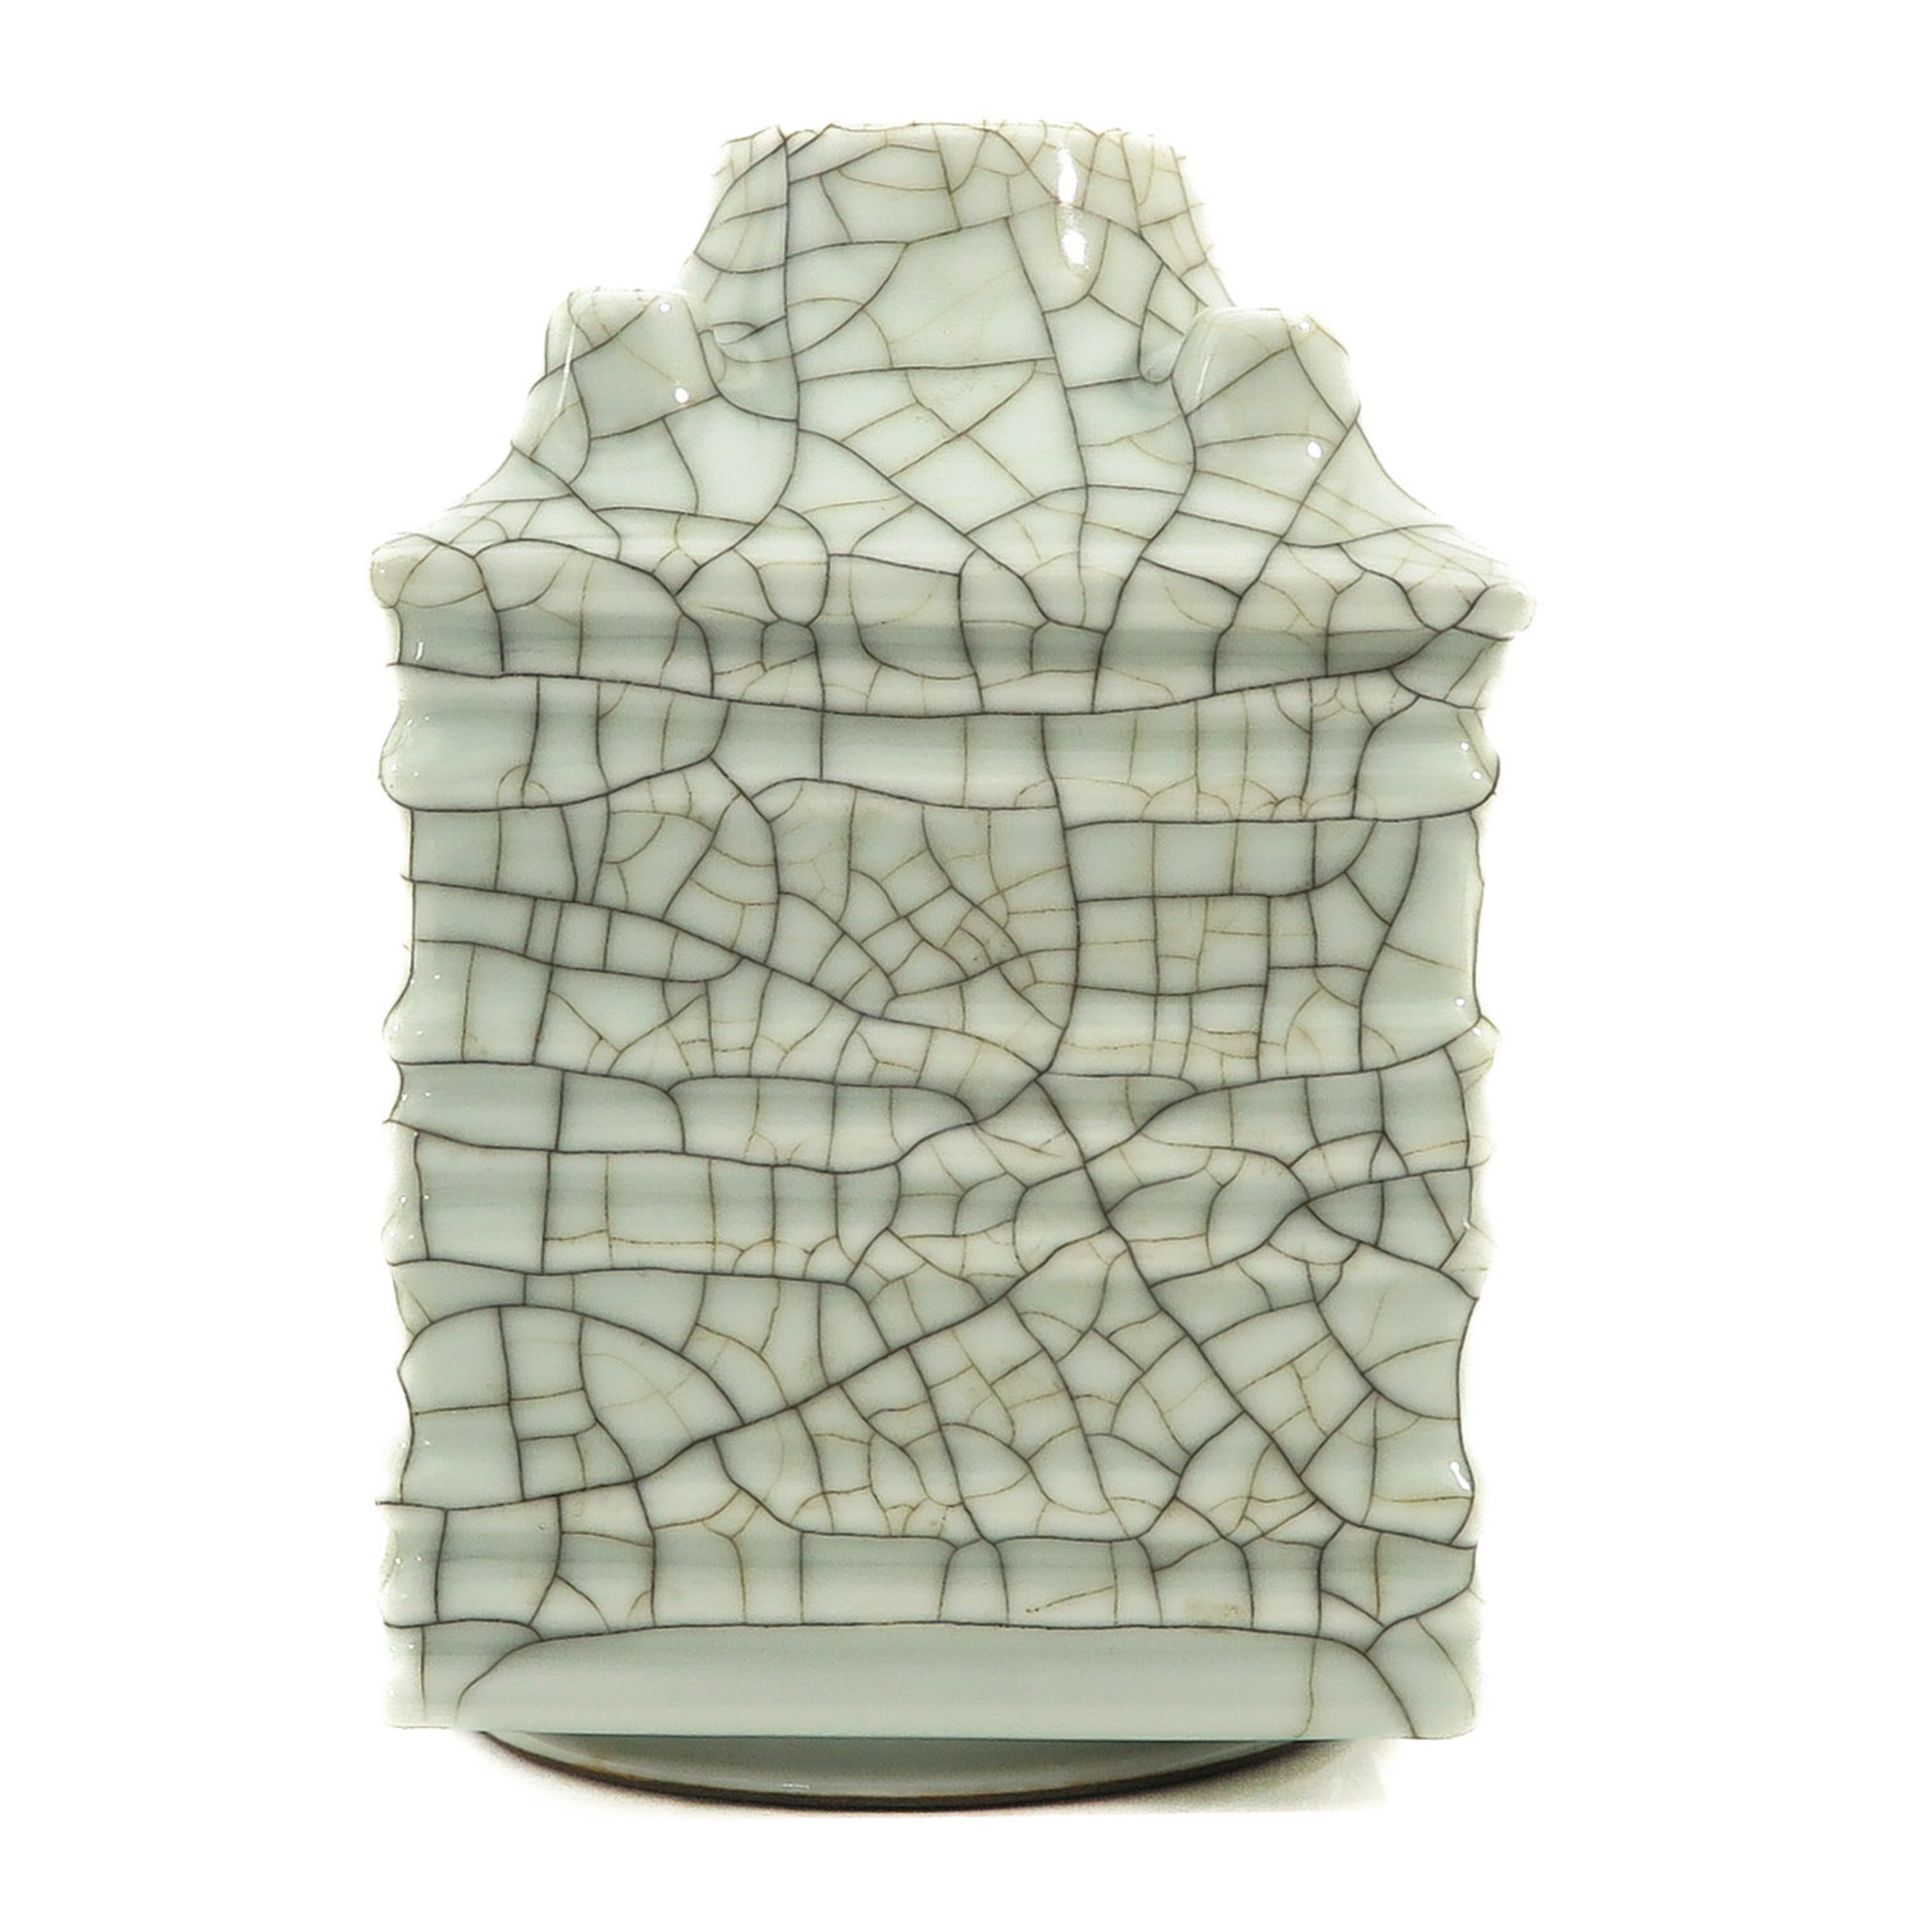 A Crackle Decor Square Vase - Image 3 of 10